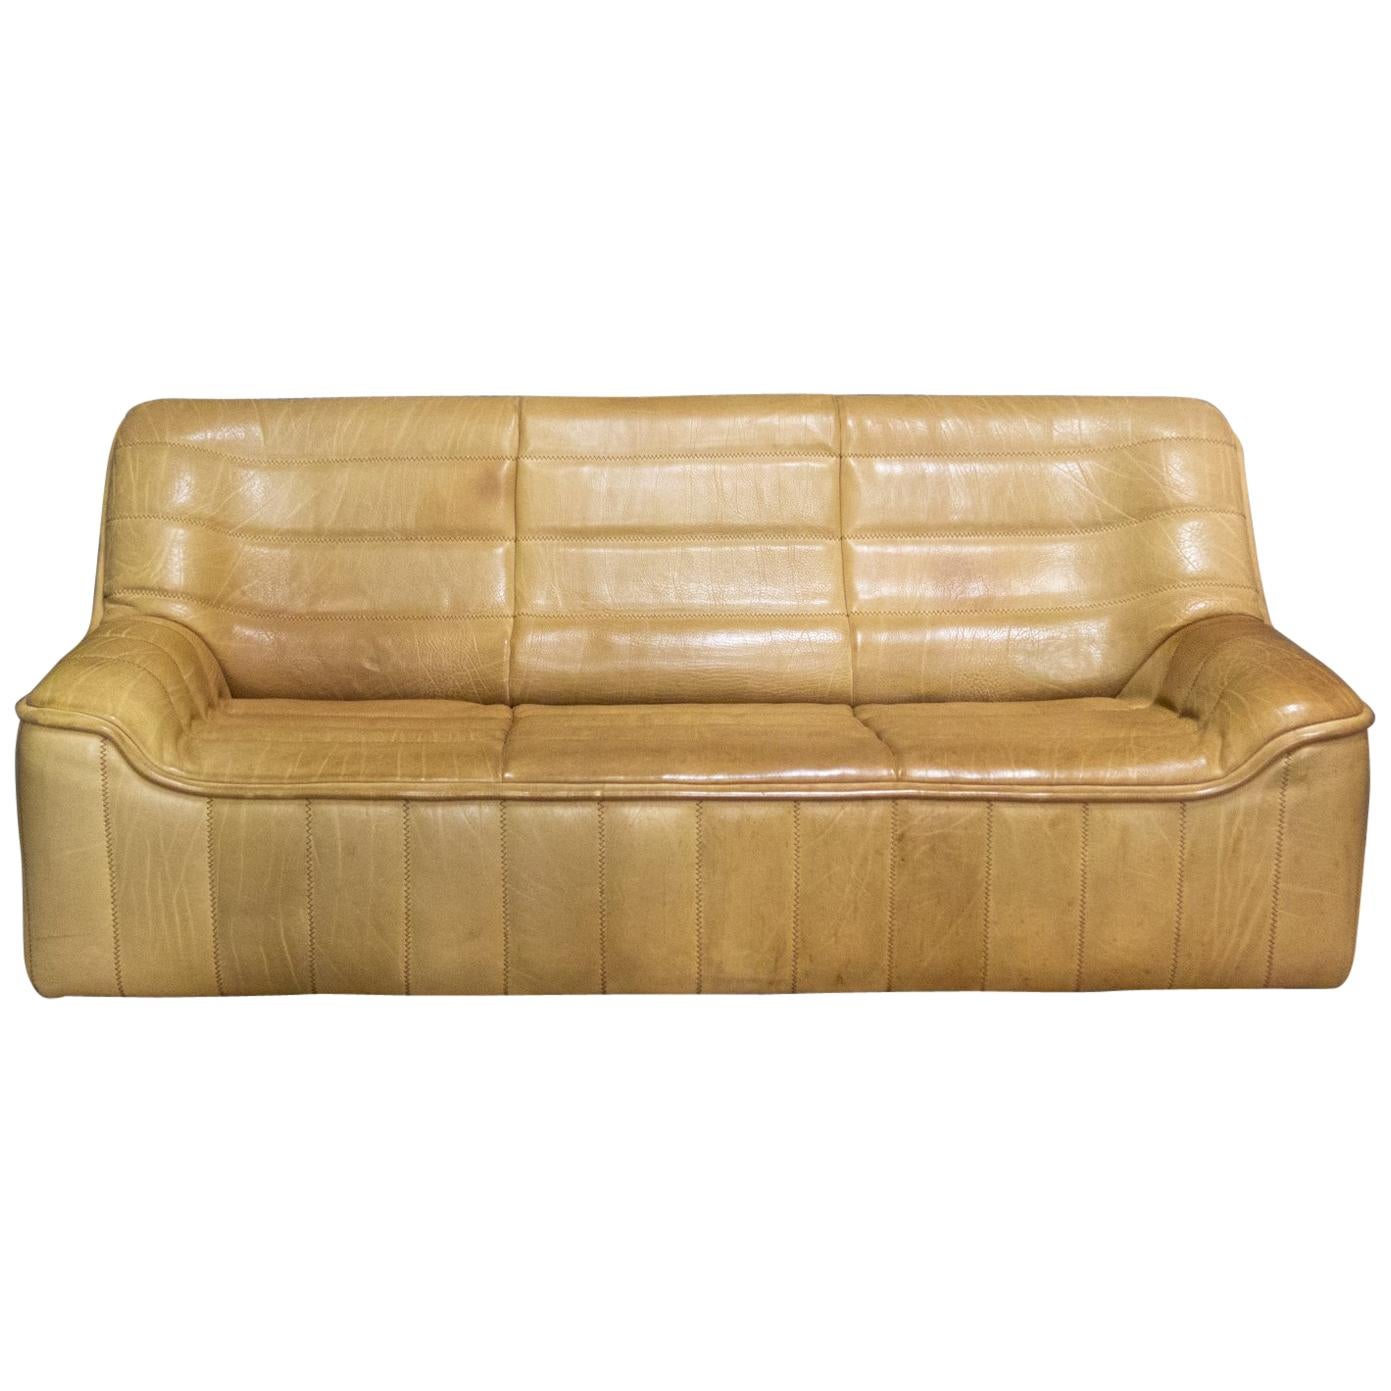 De Sede Sofa Model Ds84, Brown Leather, Switzerland, Swiss Made, 1970s